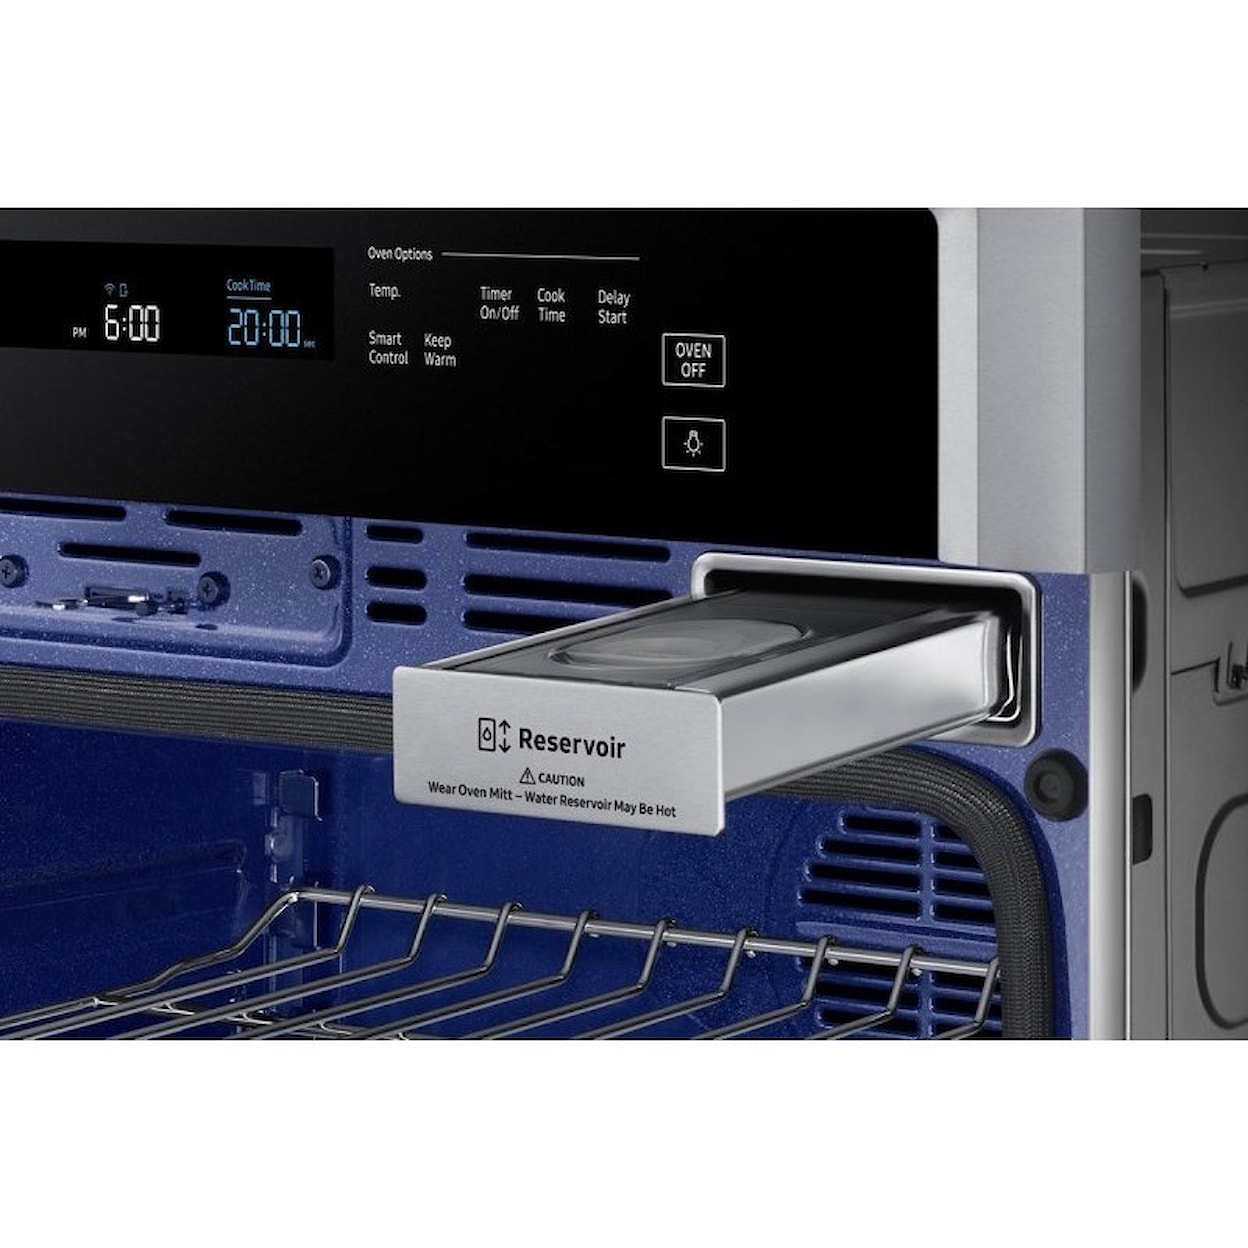 Samsung Appliances Single Wall Ovens - Samsung 30" Single Wall Oven